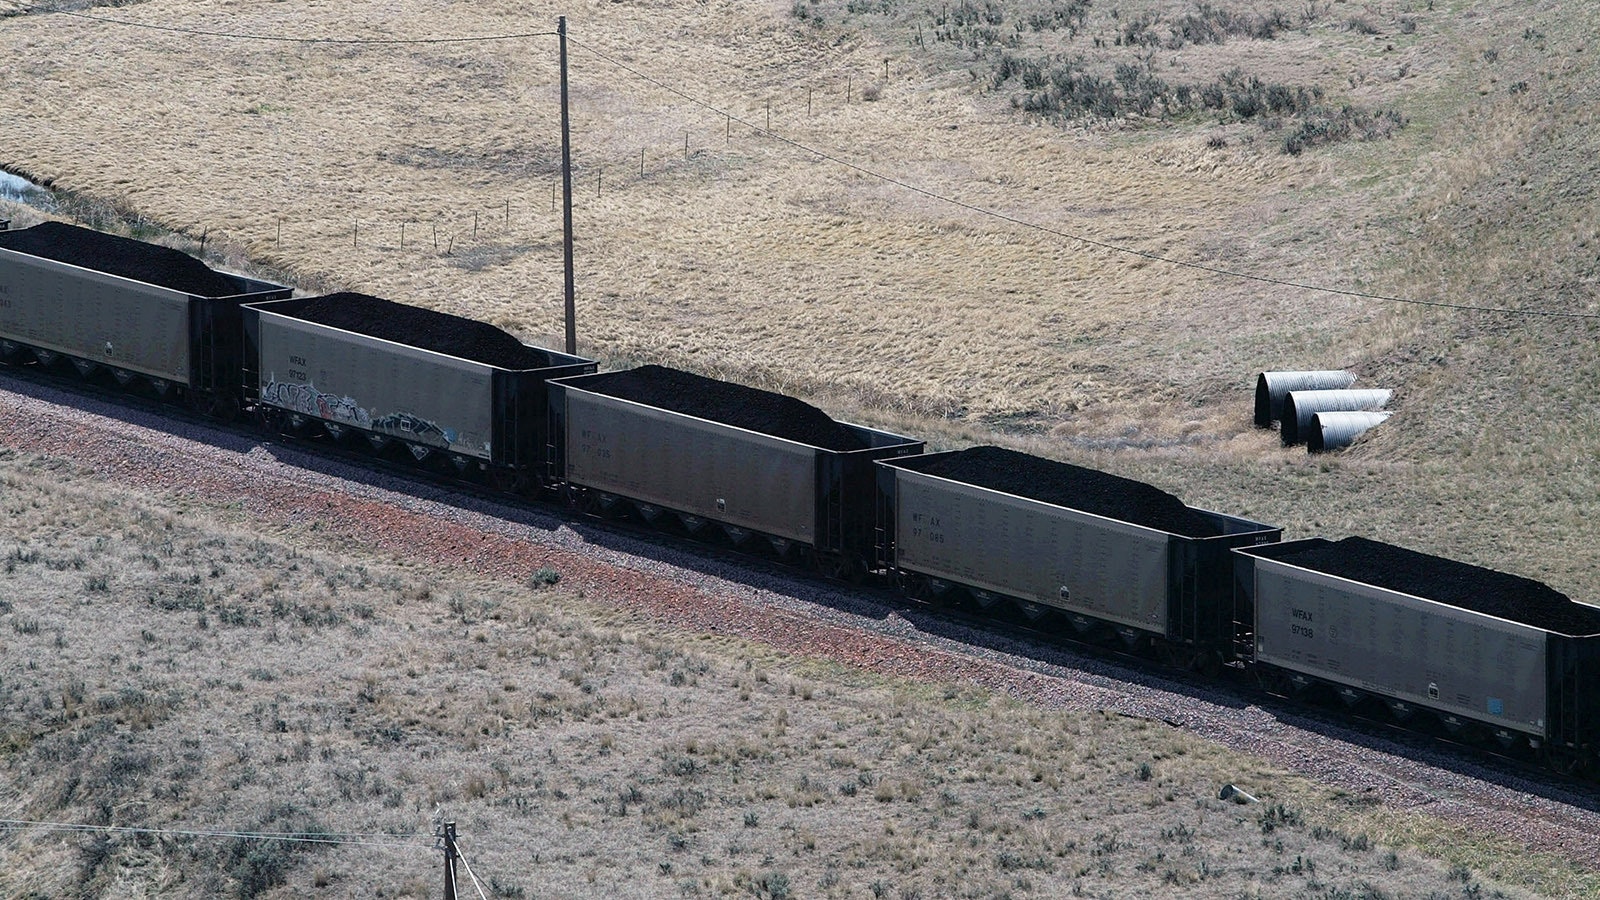 Wyoming coal train 2 9 23